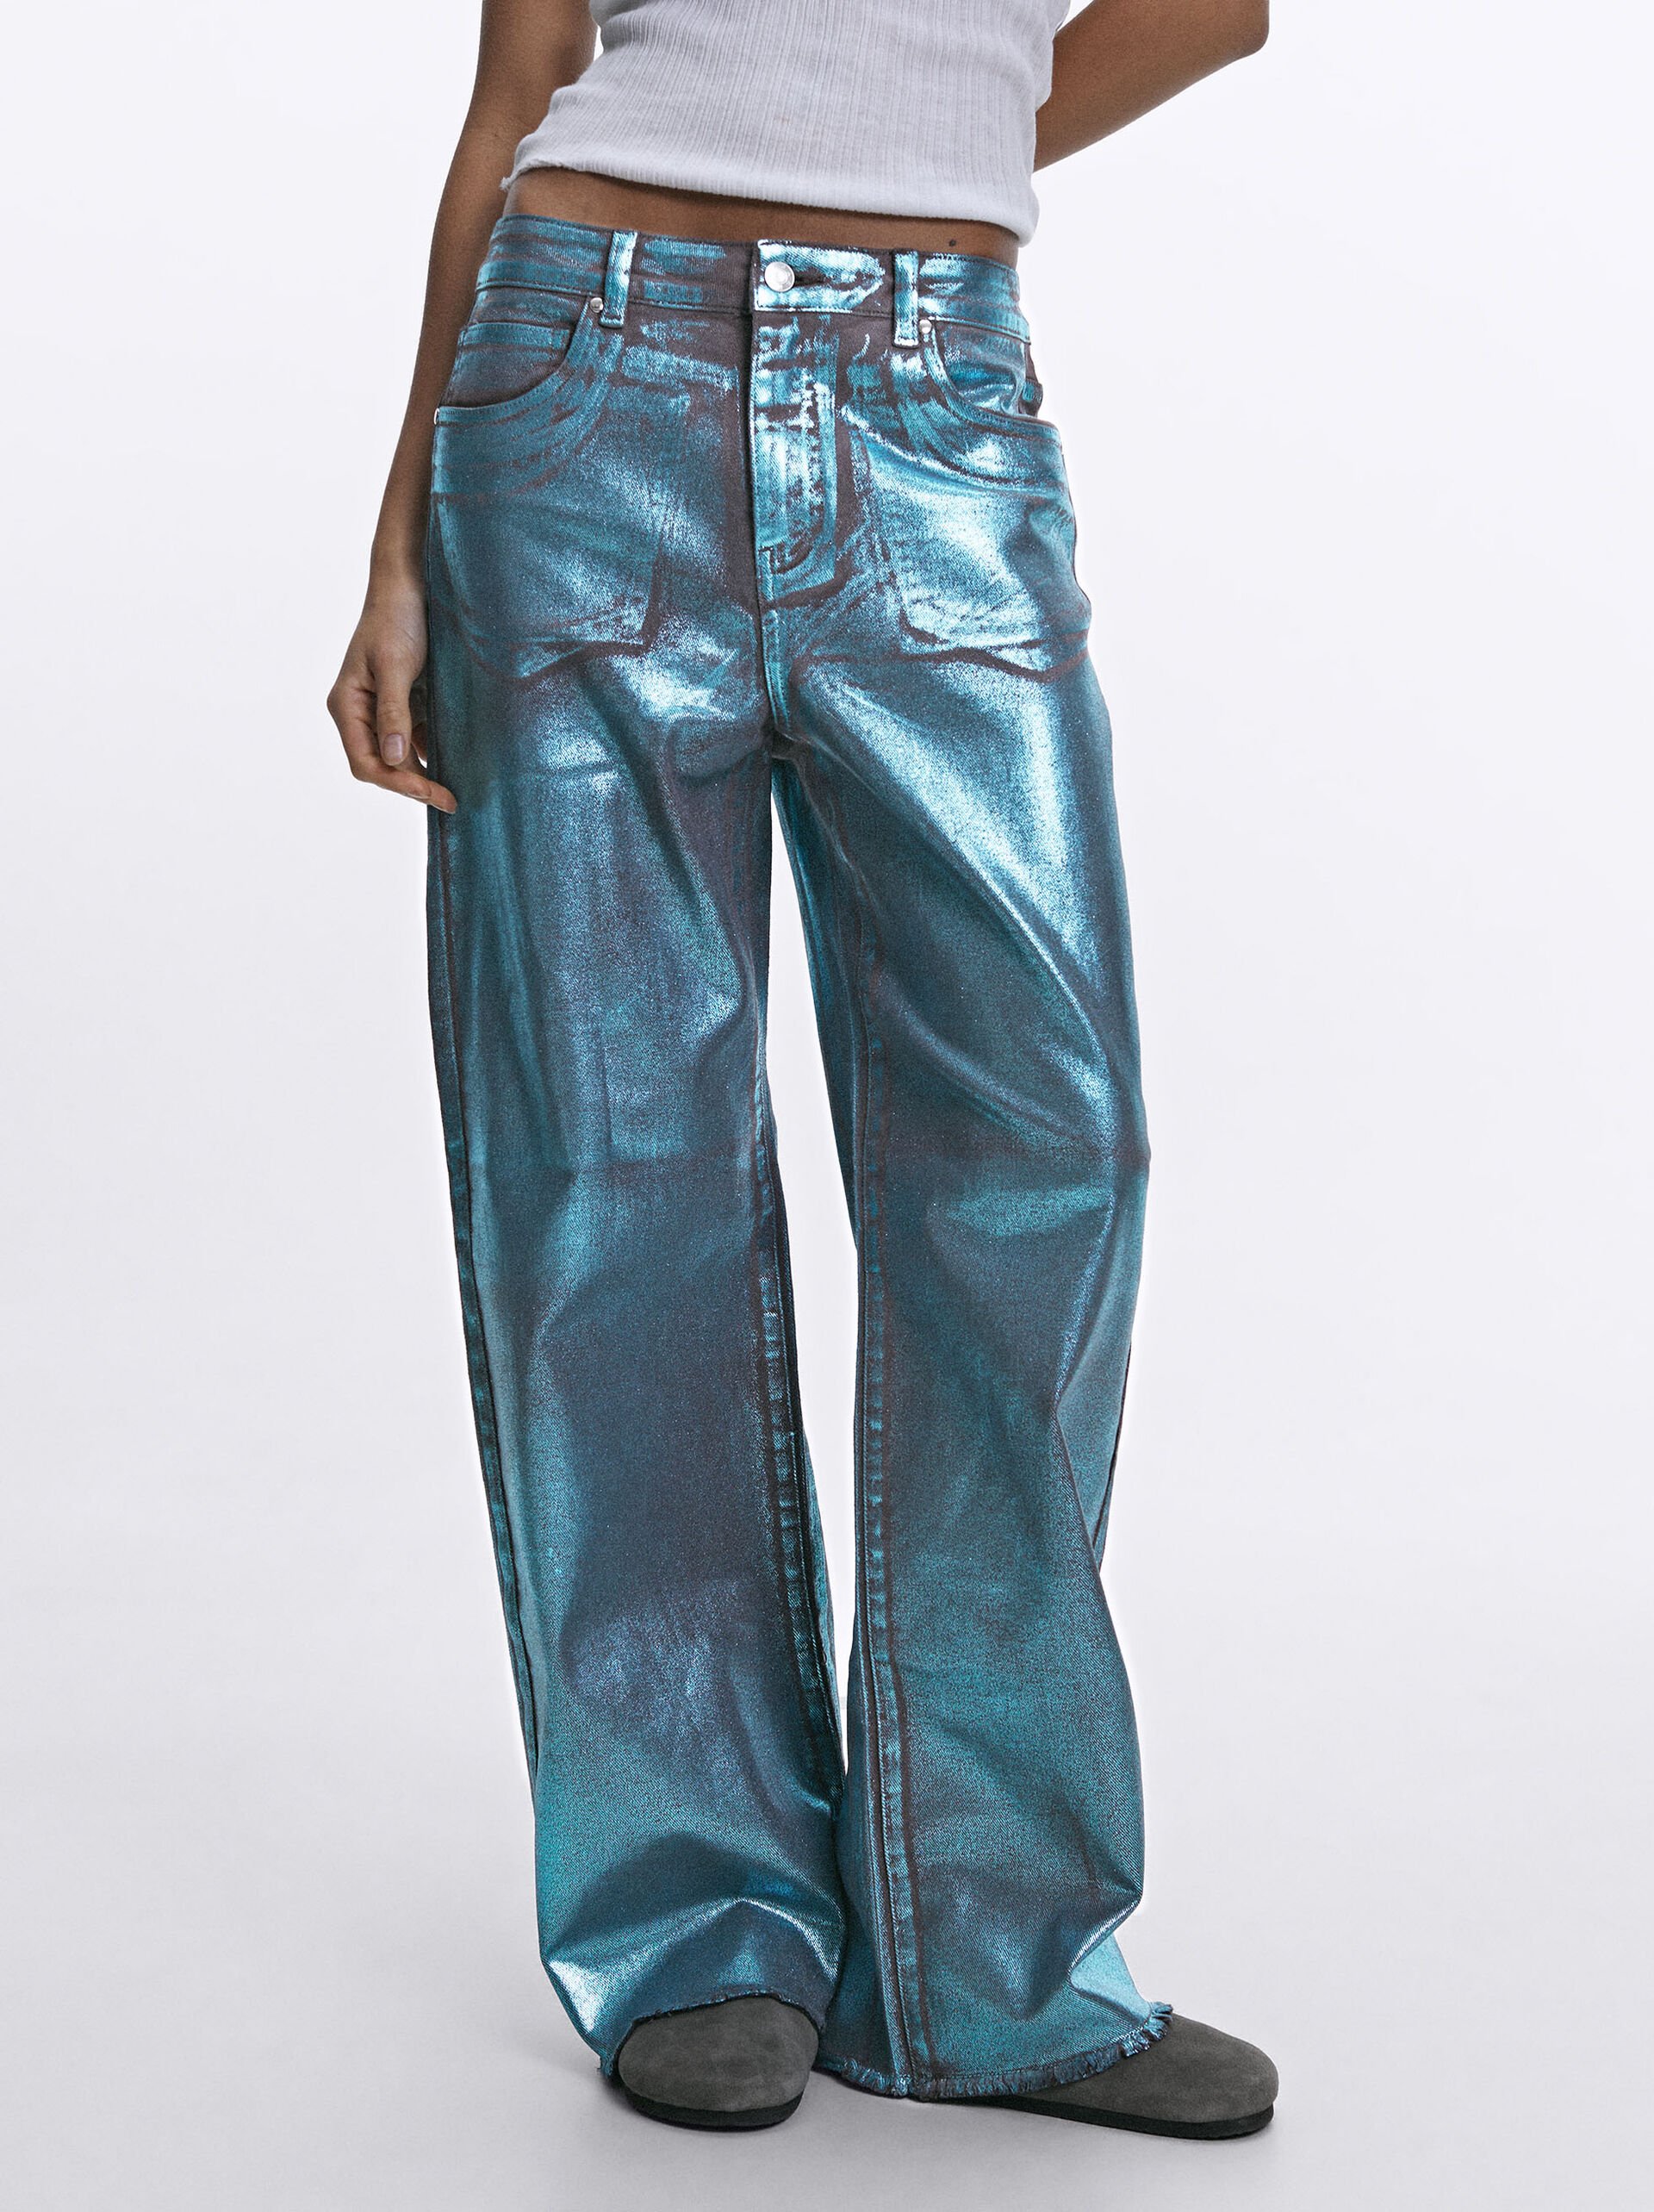 Jeans In Metallic-Optik image number 2.0